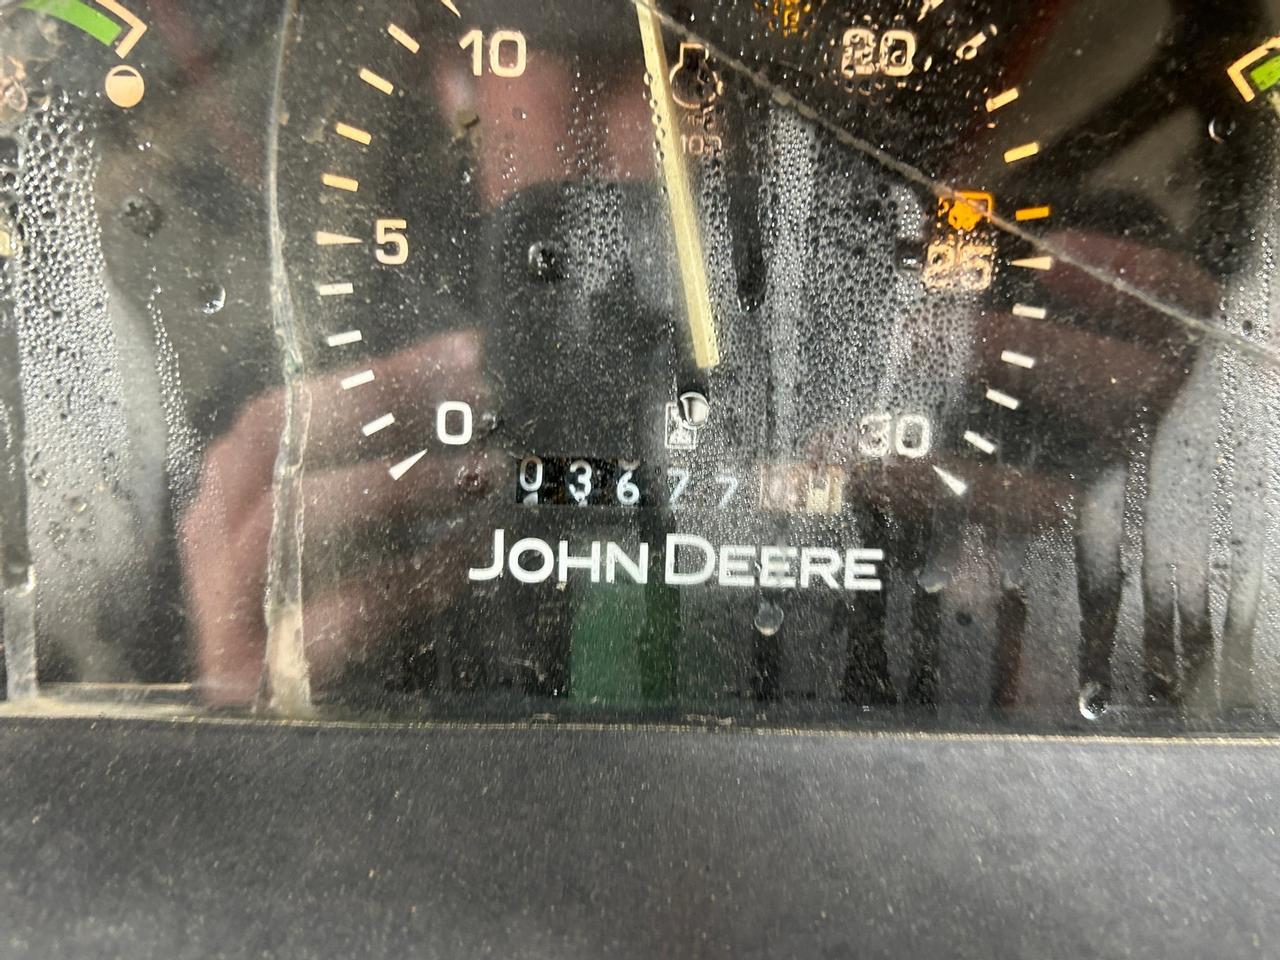 John Deere 5203 Tractor with Loader